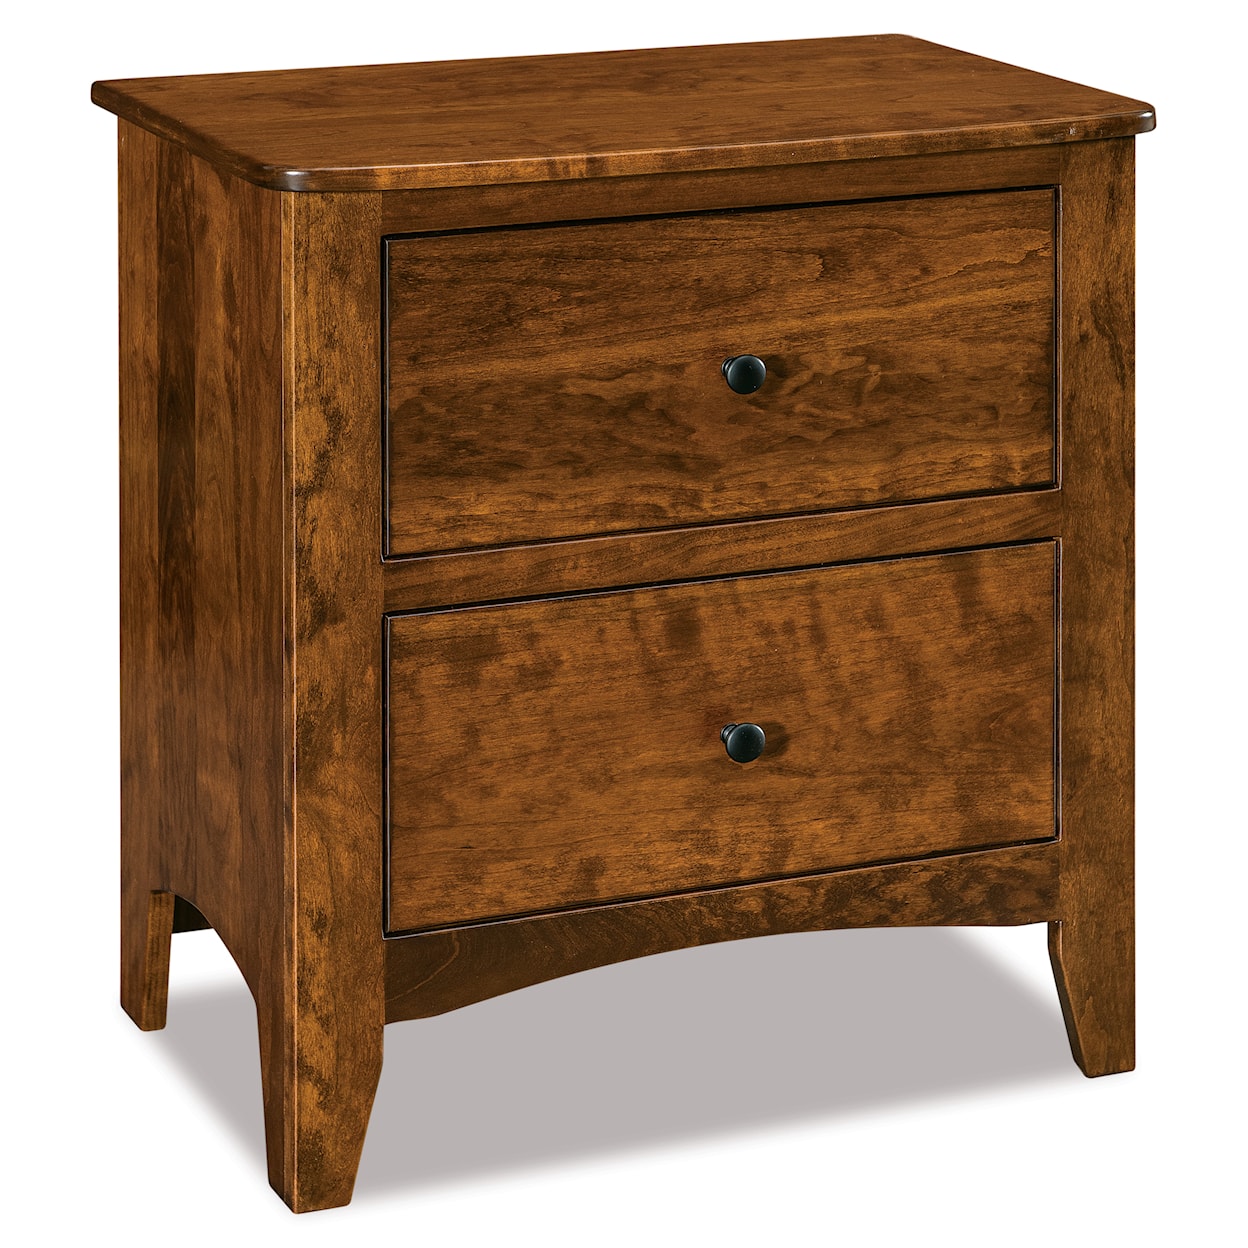 Archbold Furniture Bob Timberlake 2-Drawer Nightstand